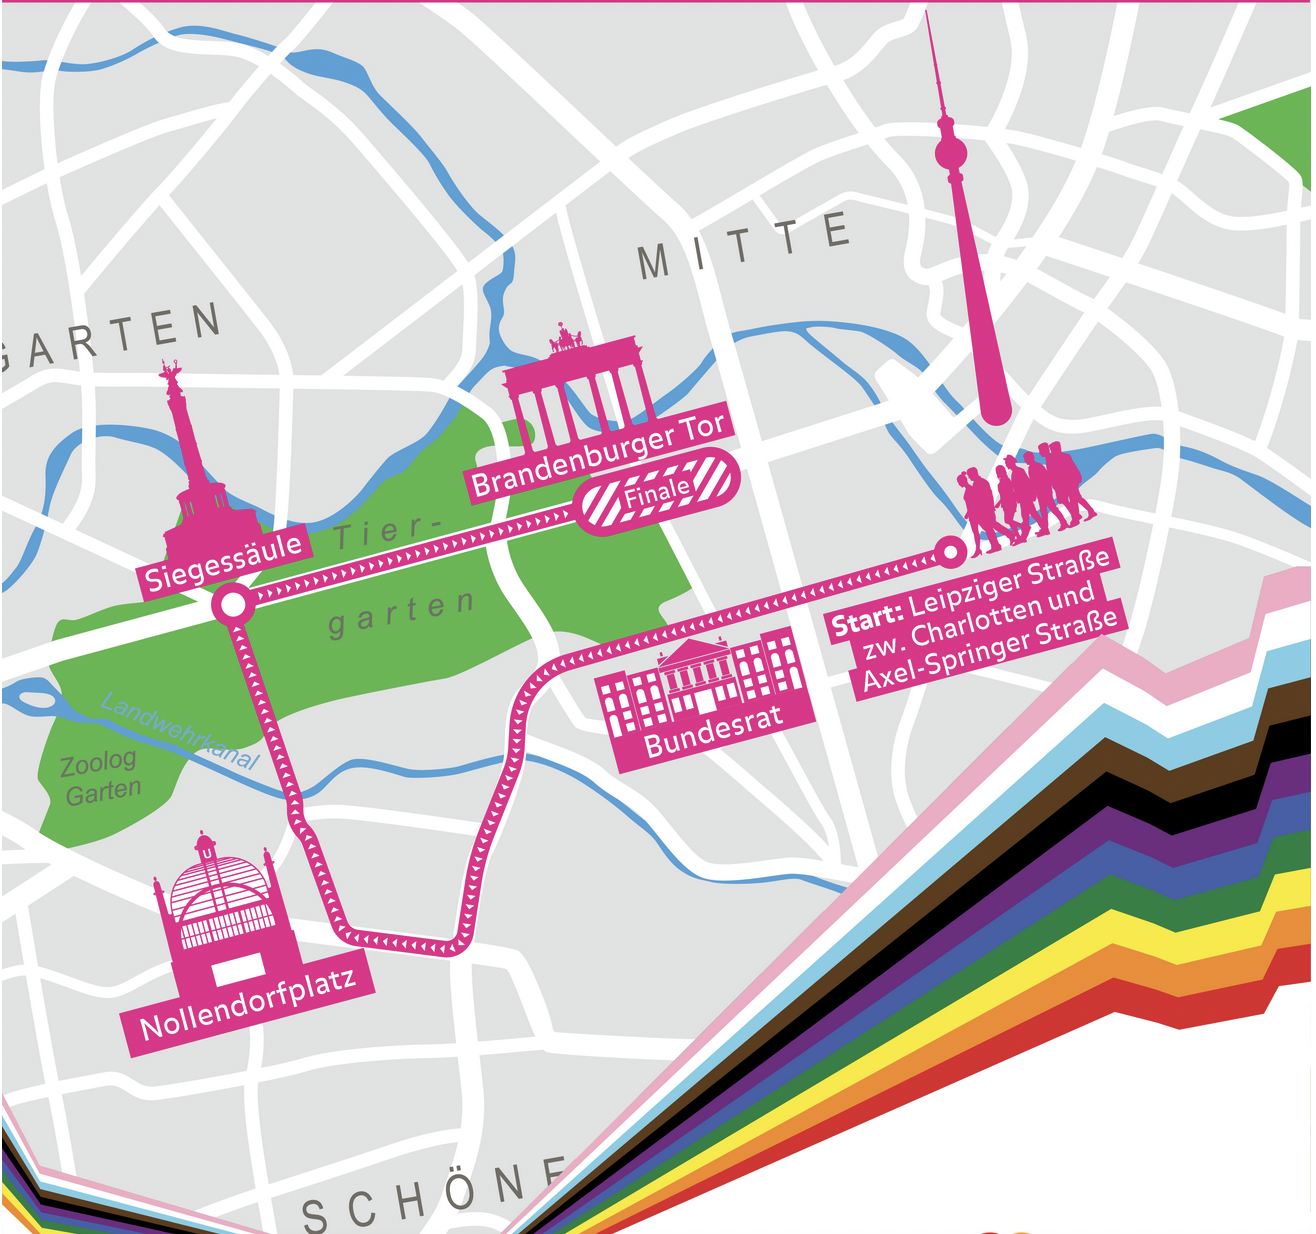 Il corteo del Berlin Pride 2022 dal sito ufficiale https://csd-berlin.de/en/csd-berlin-2022-2/demo-route-finale-2022/